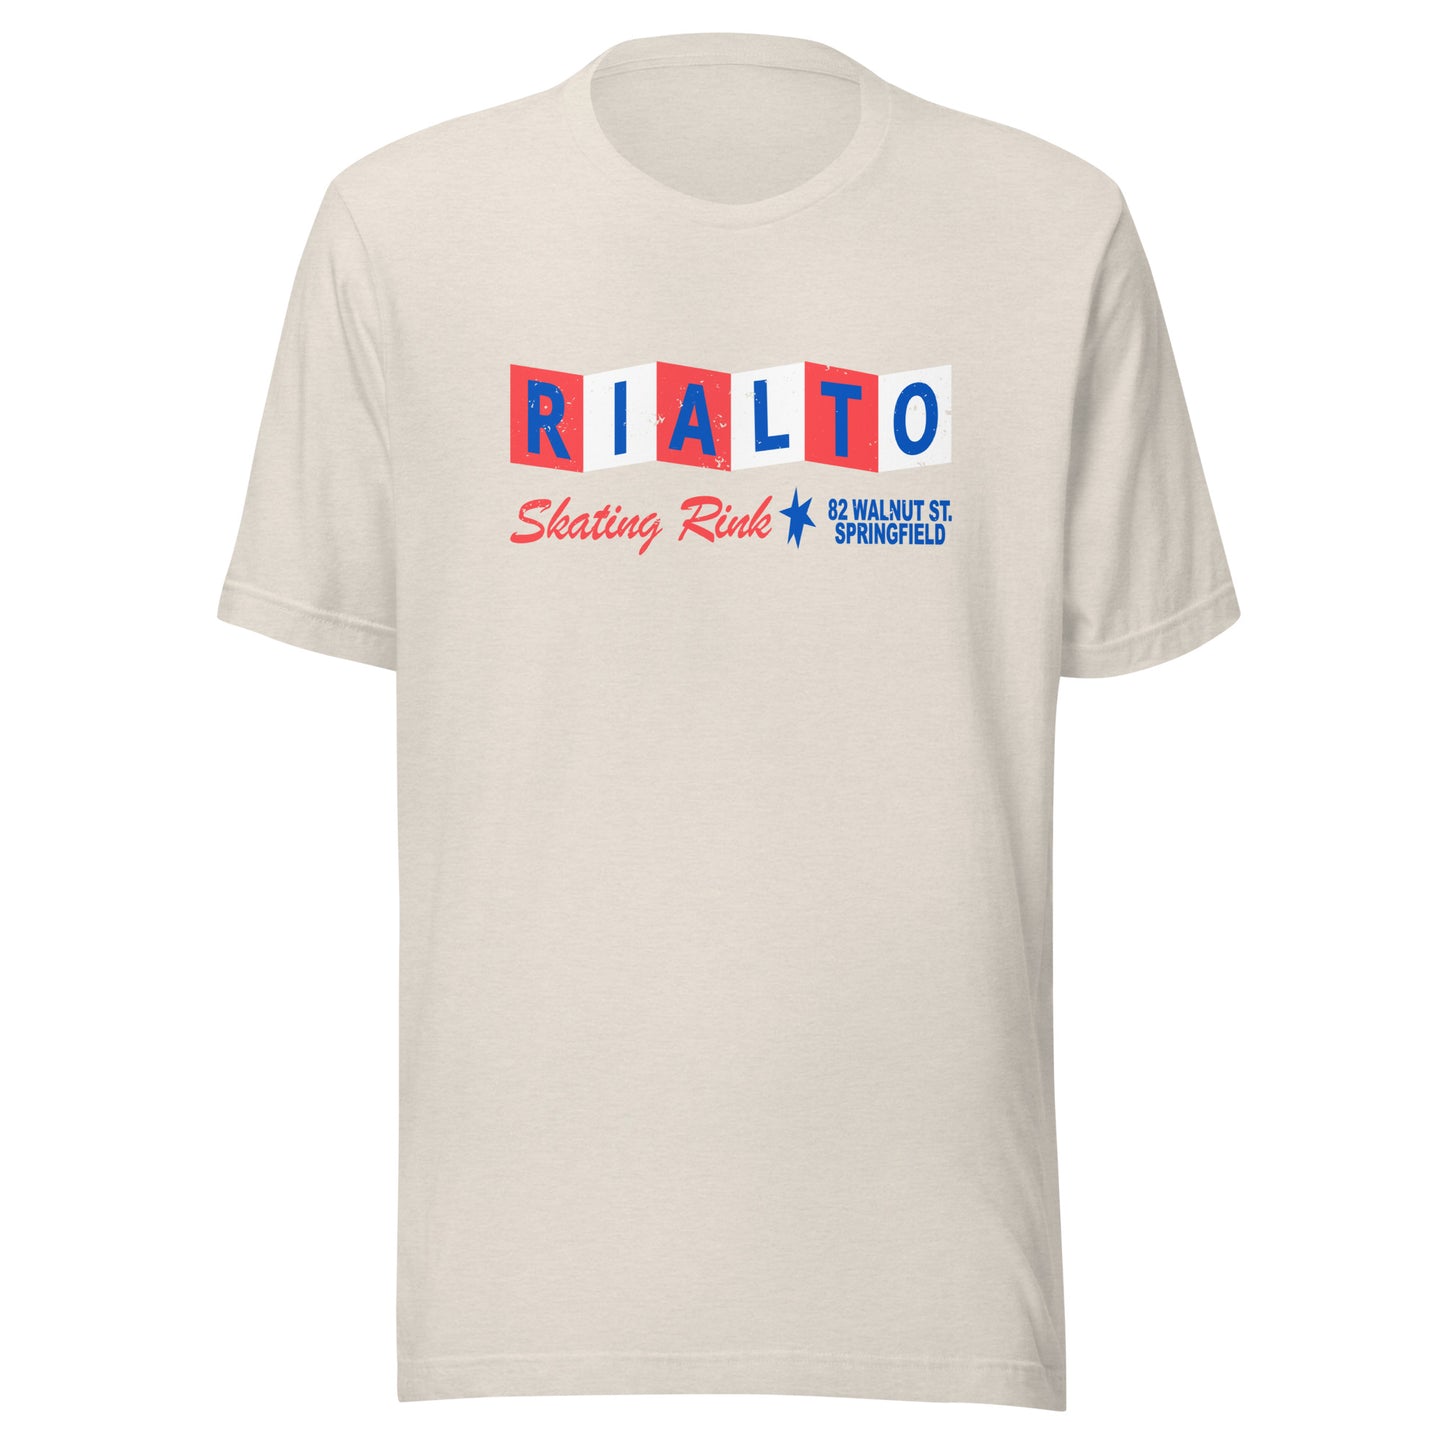 Rialto Skating Rink Retro T-Shirt - Springfield, MA | Vintage Roller Skating Tee